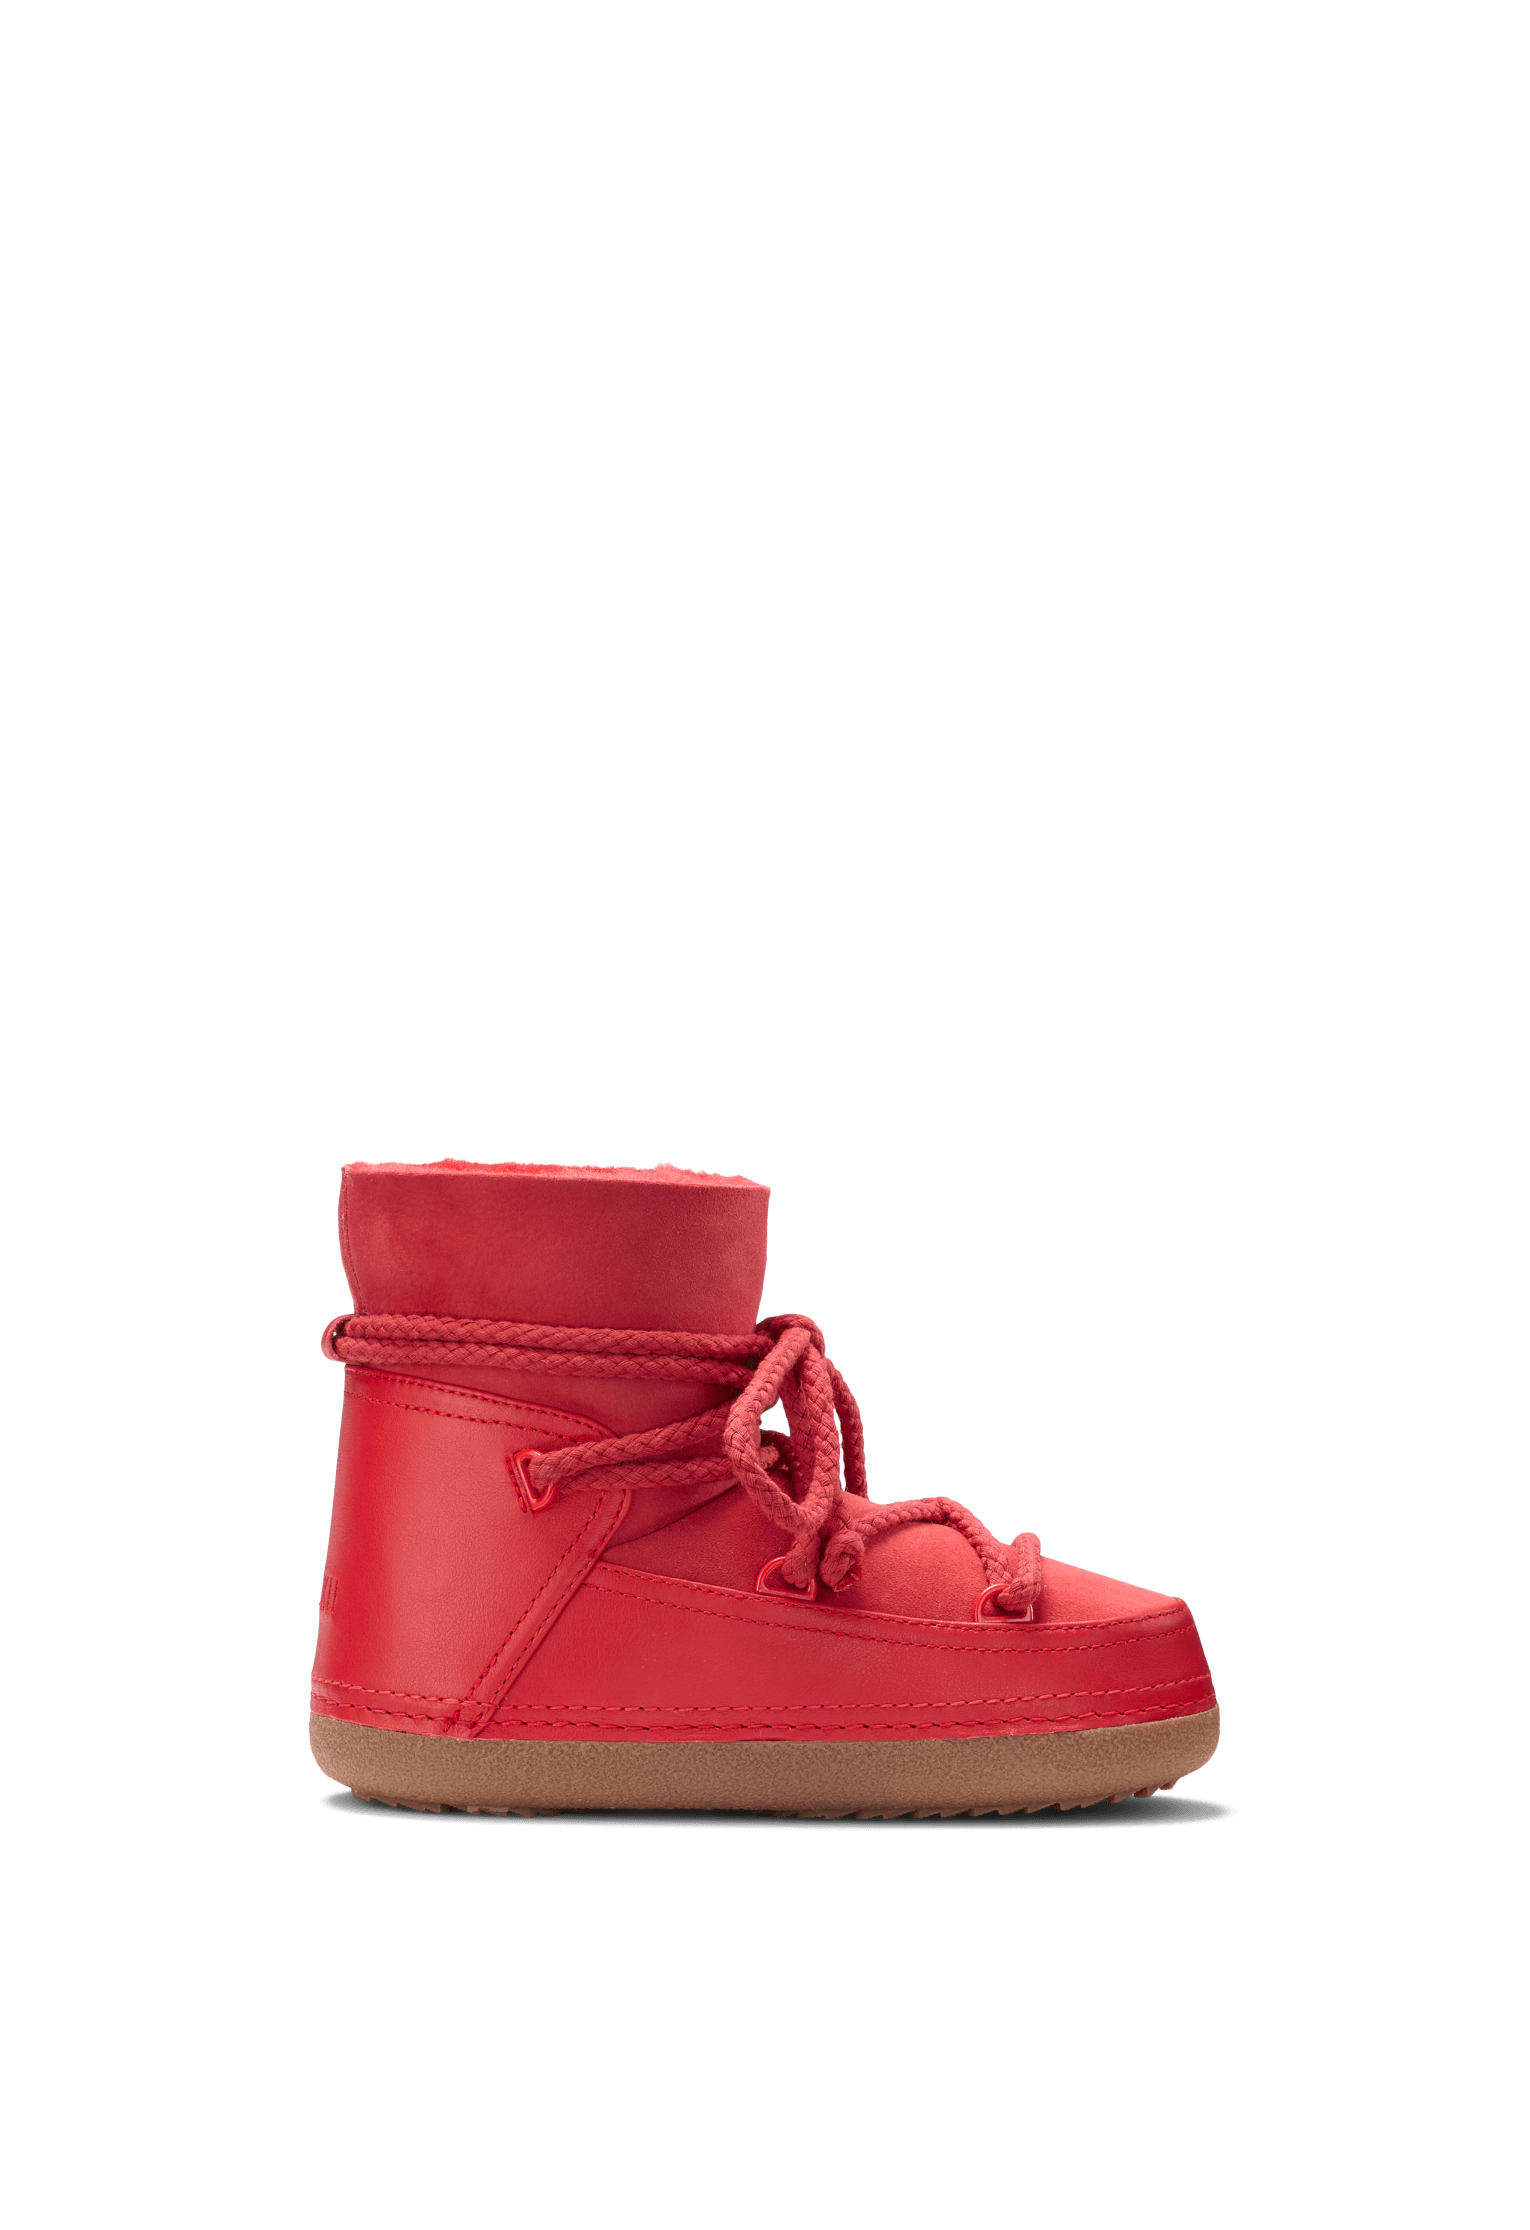 Uterqüe boots WOMEN FASHION Footwear Basic Red discount 89% 